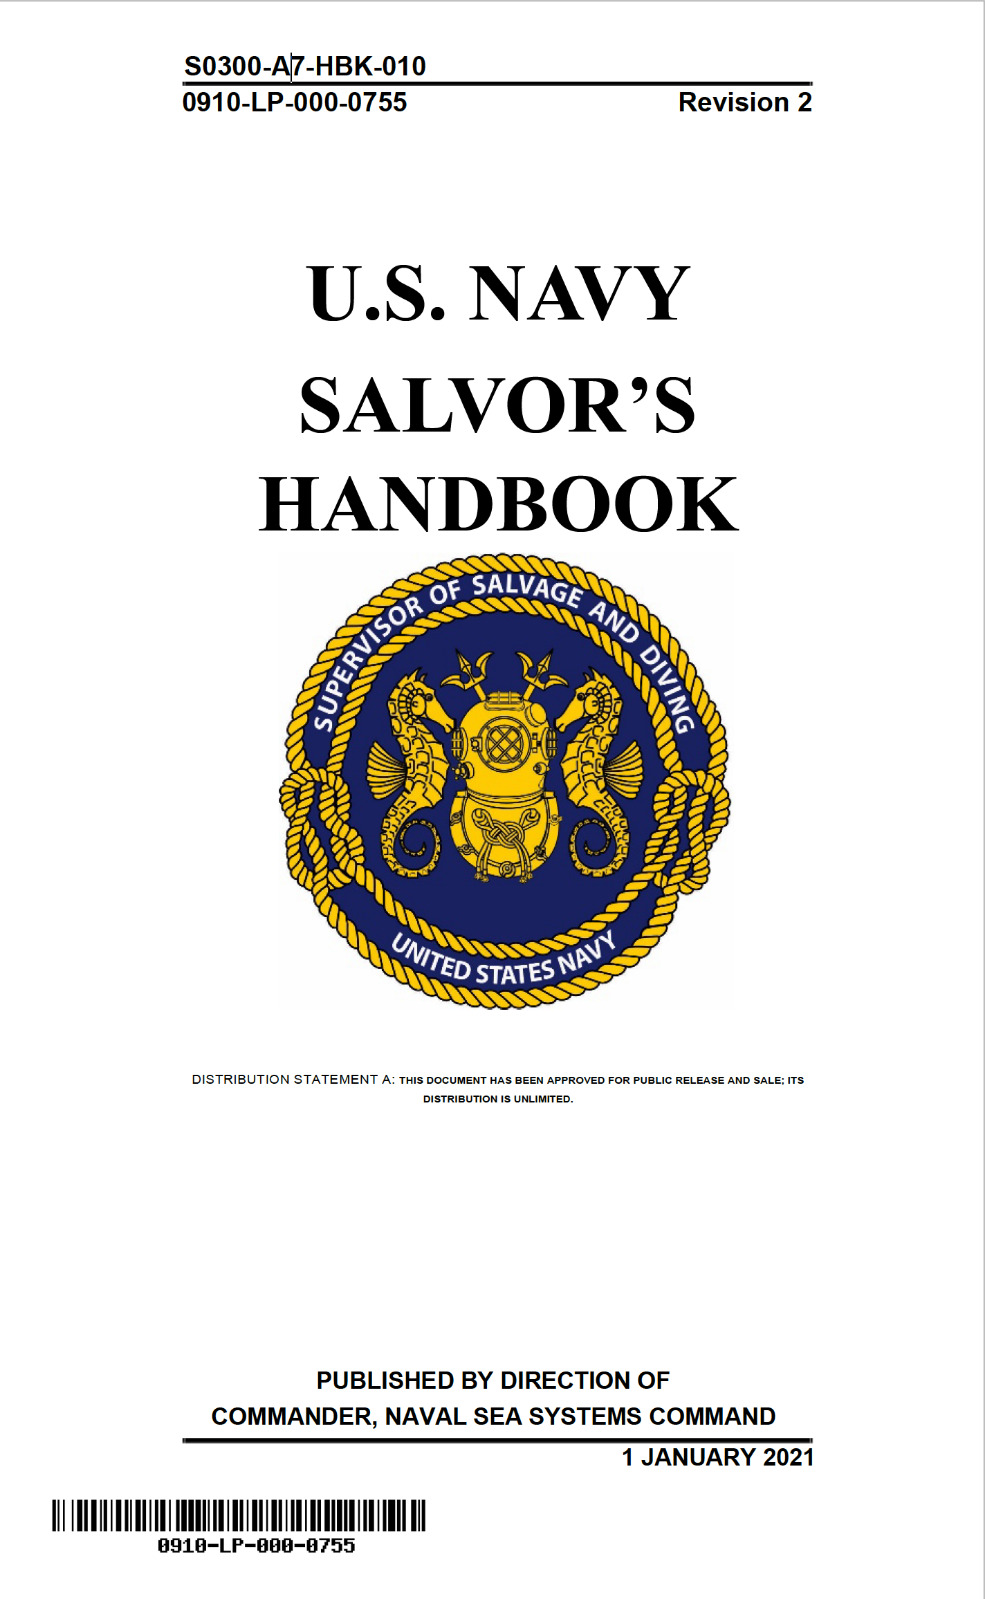 278 Page 2021 Boat Vessel Ship NAVY SALVOR’S HANDBOOK Firefighting on Data CD